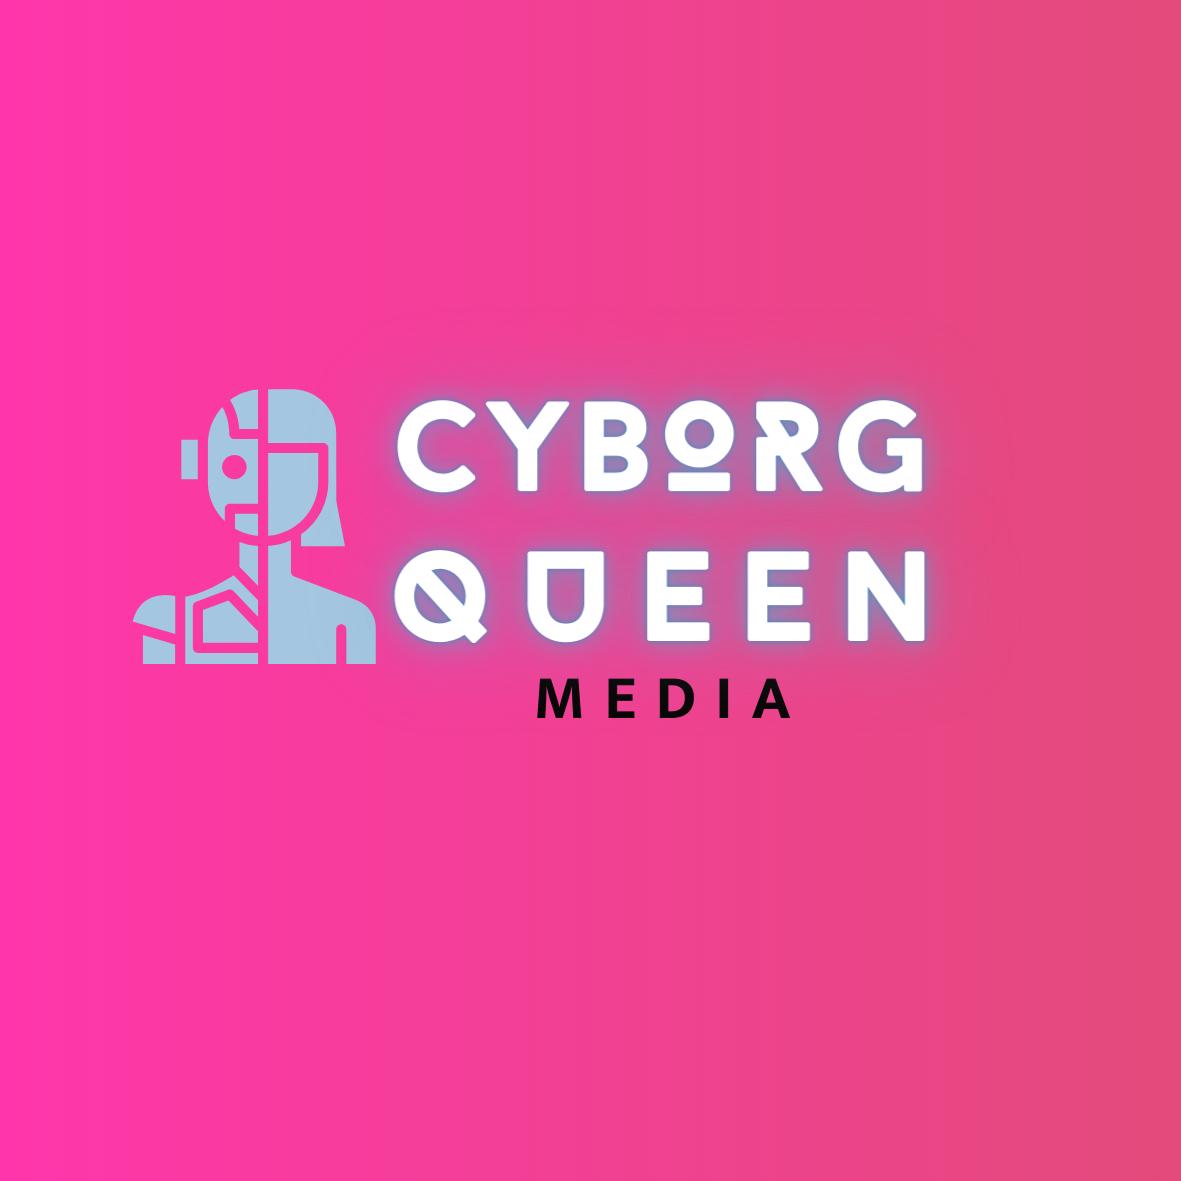 Cyborg Queen's images